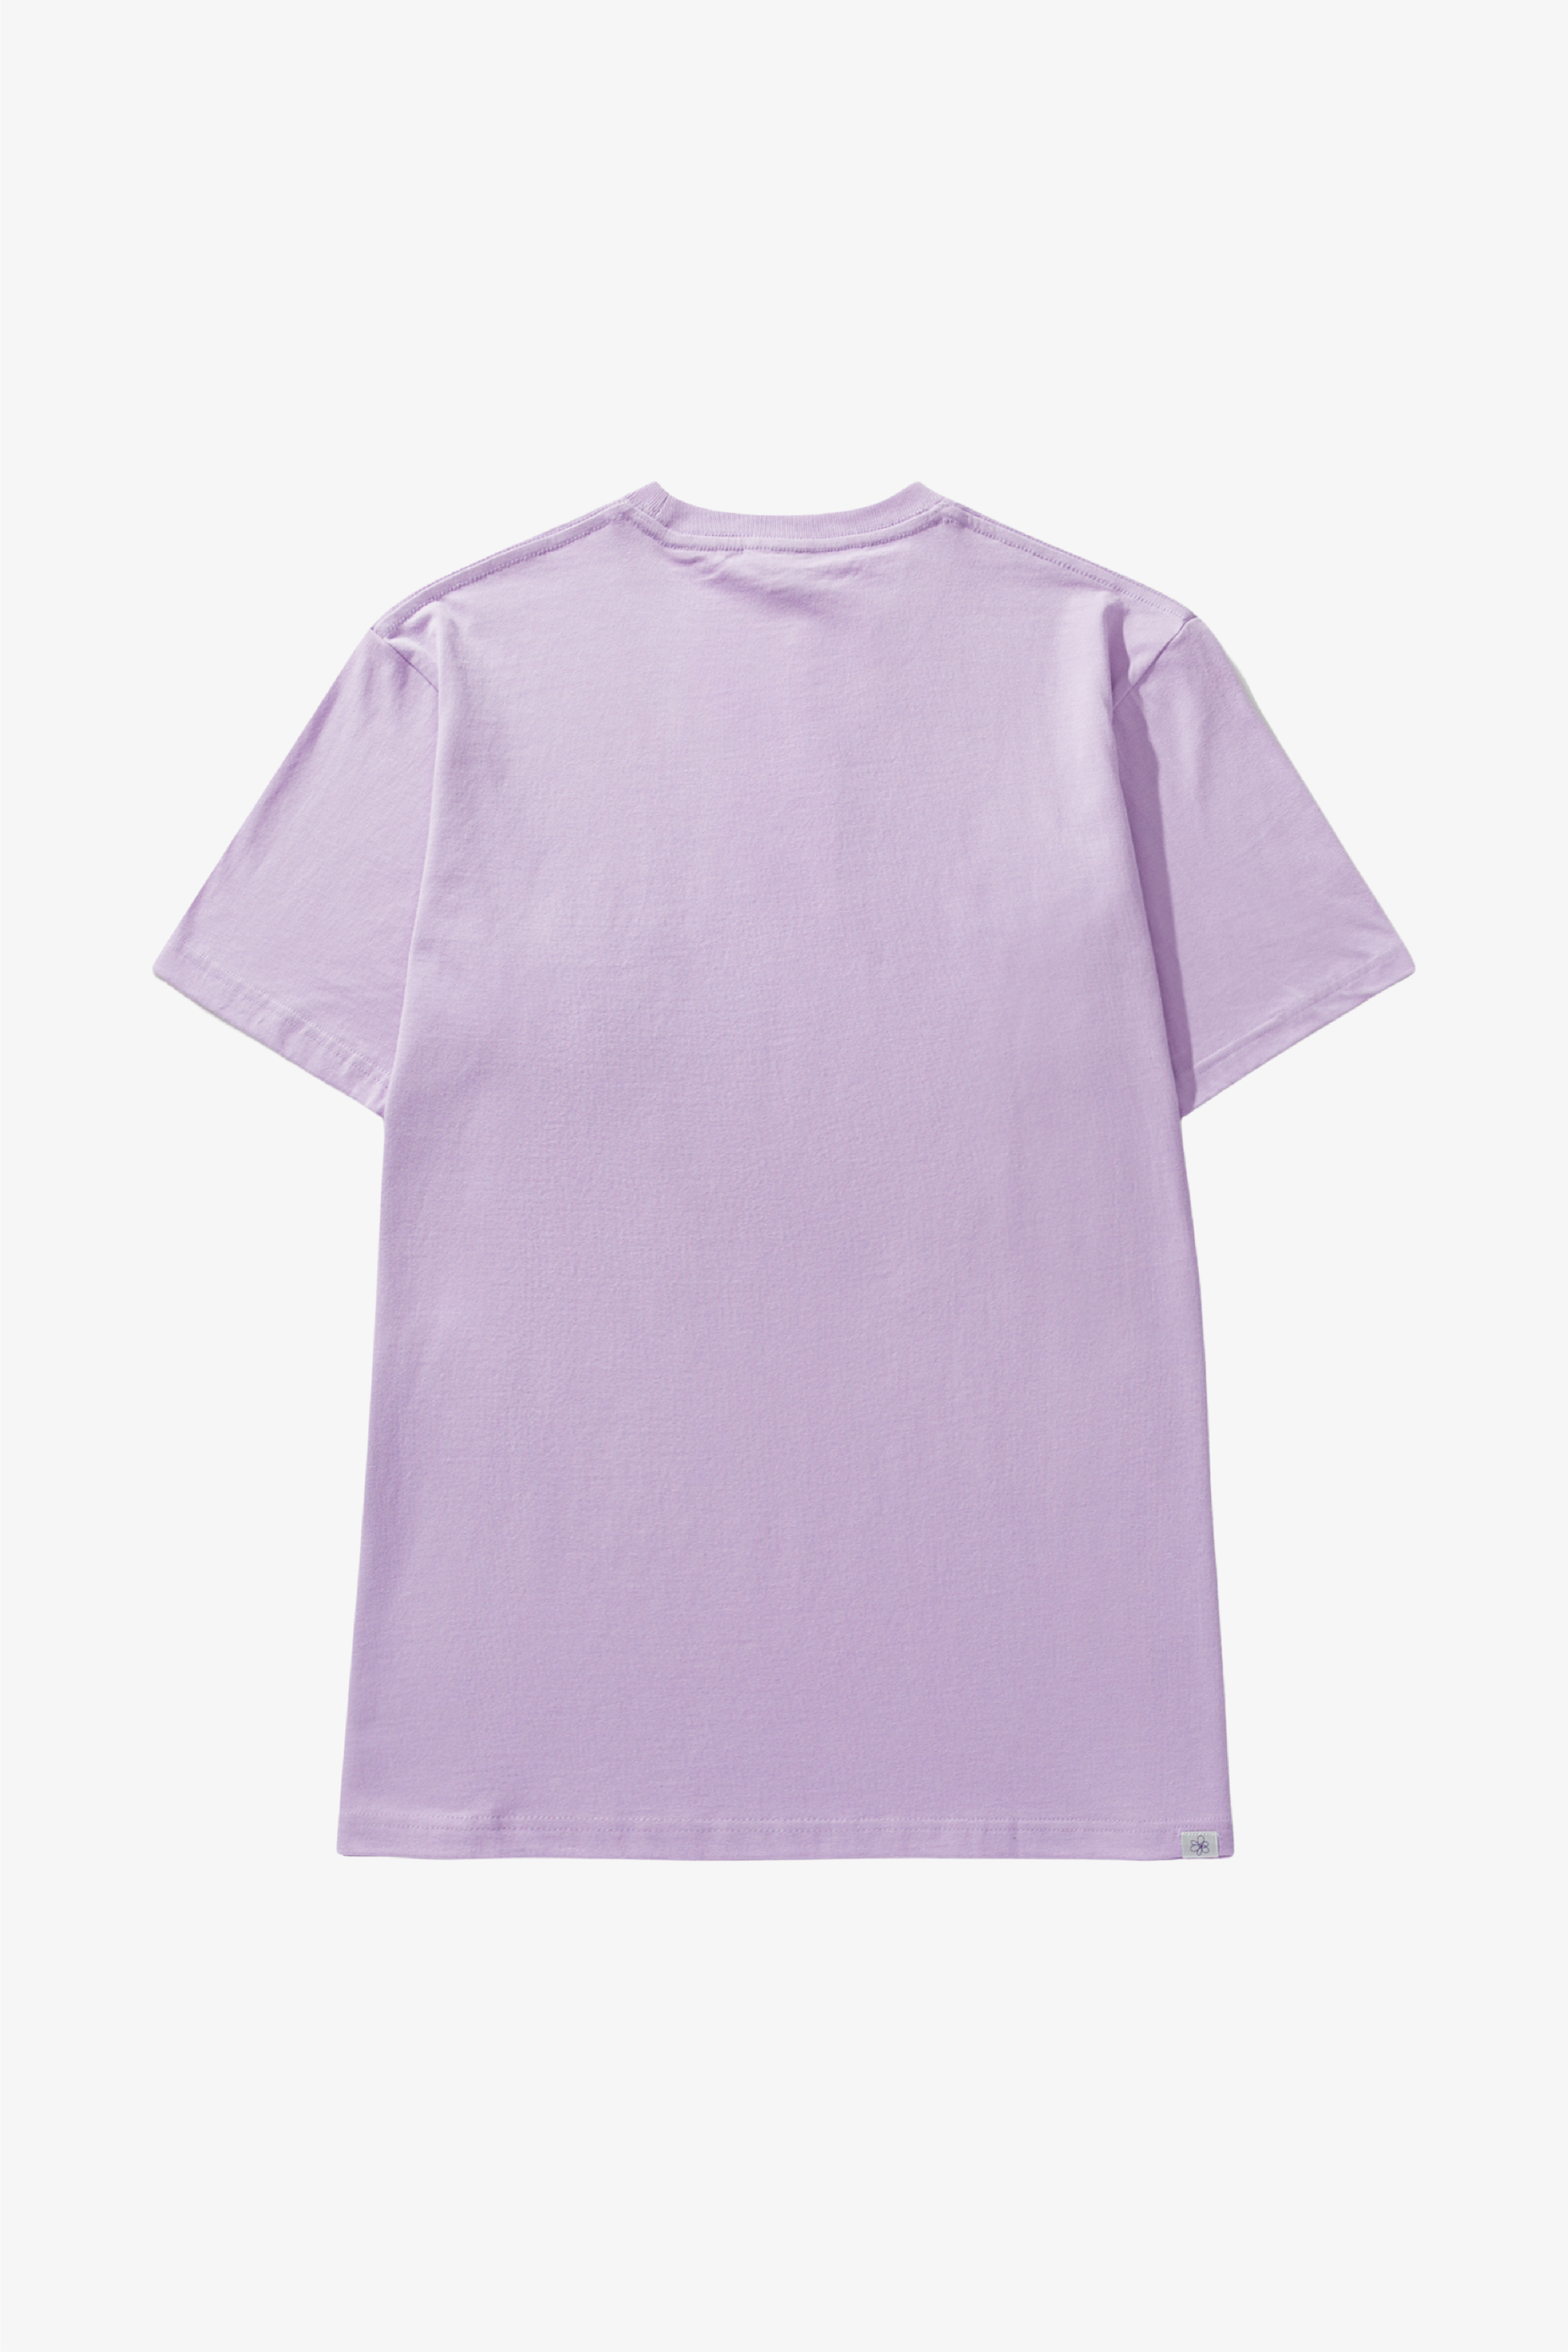 Selectshop FRAME - PAM Formation Tee T-Shirts Dubai